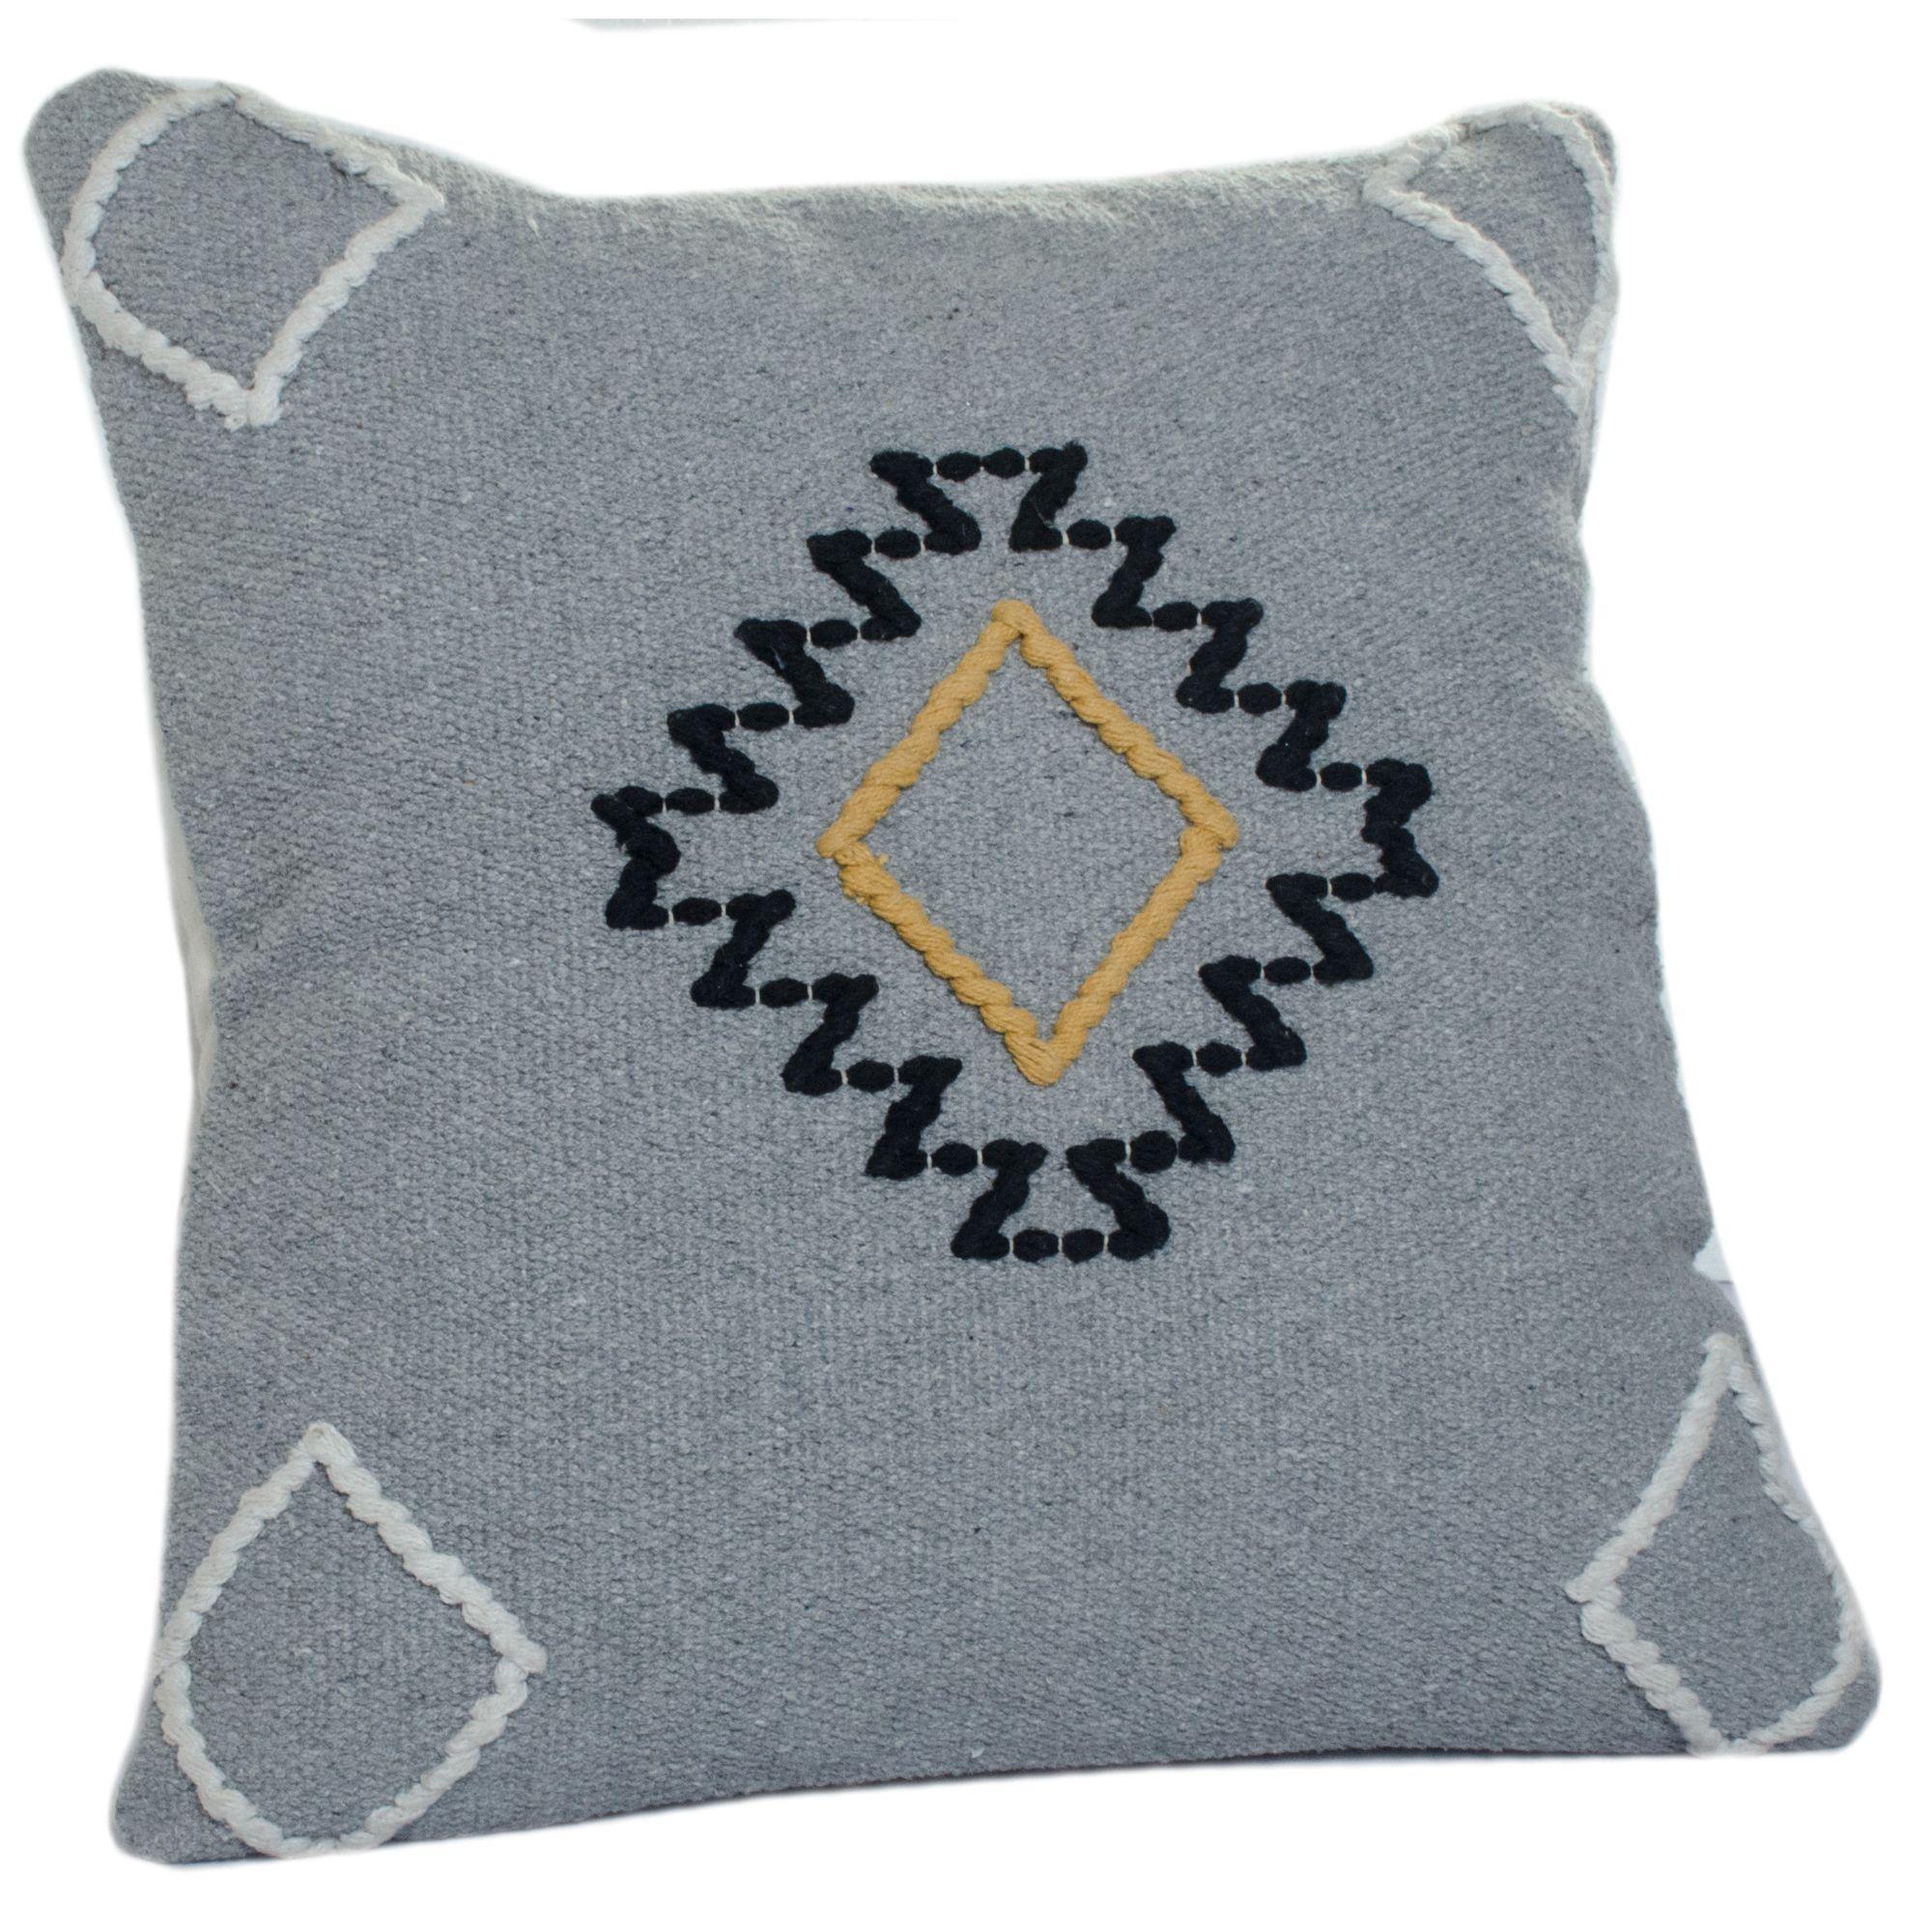 20" Gray and White Scandinavian Diamond Motif Square Throw Pillow alternate image